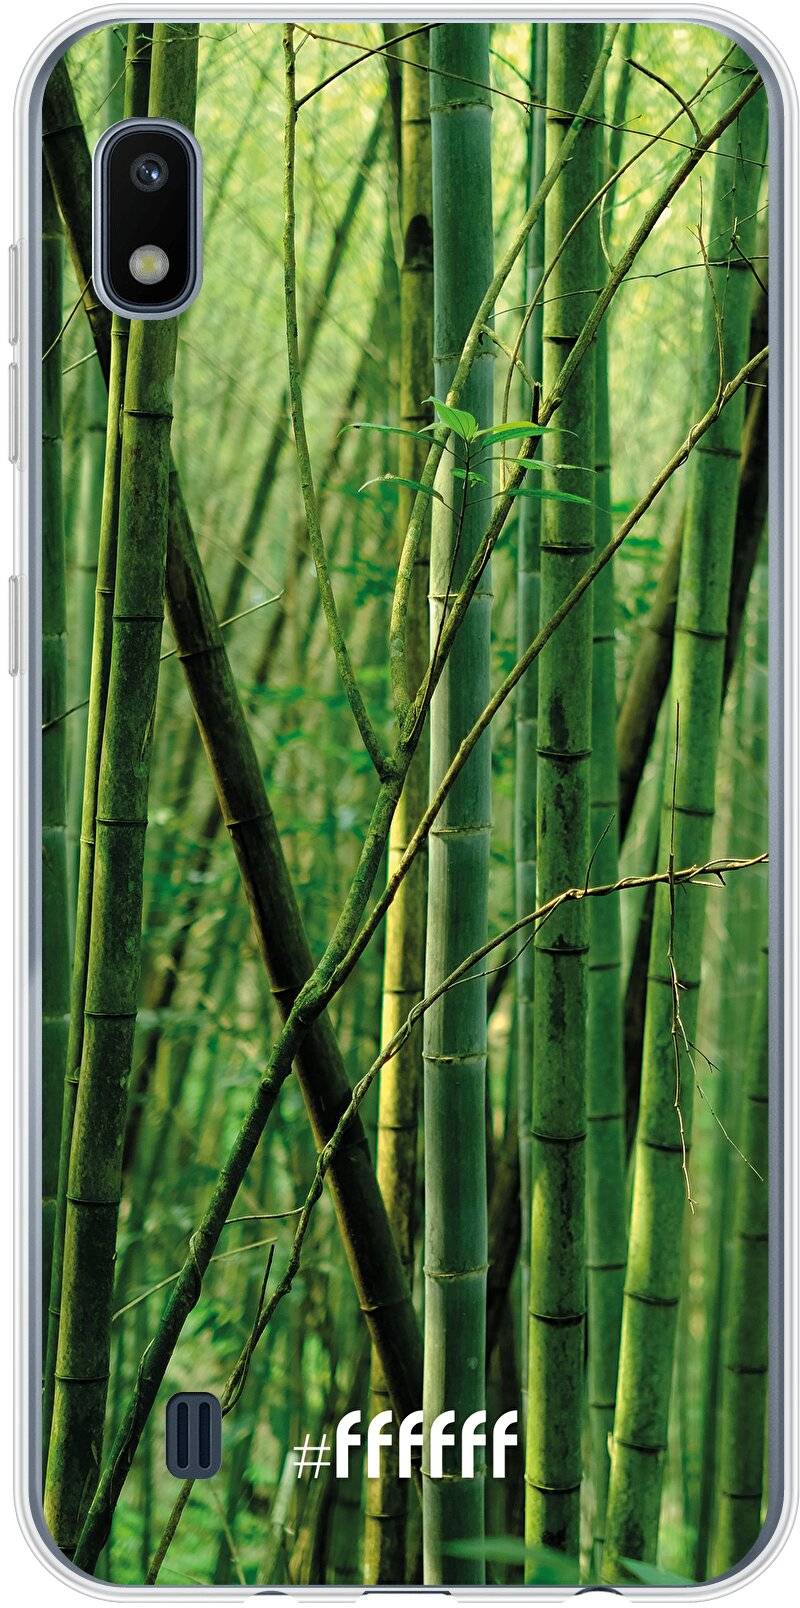 Bamboo Galaxy A10